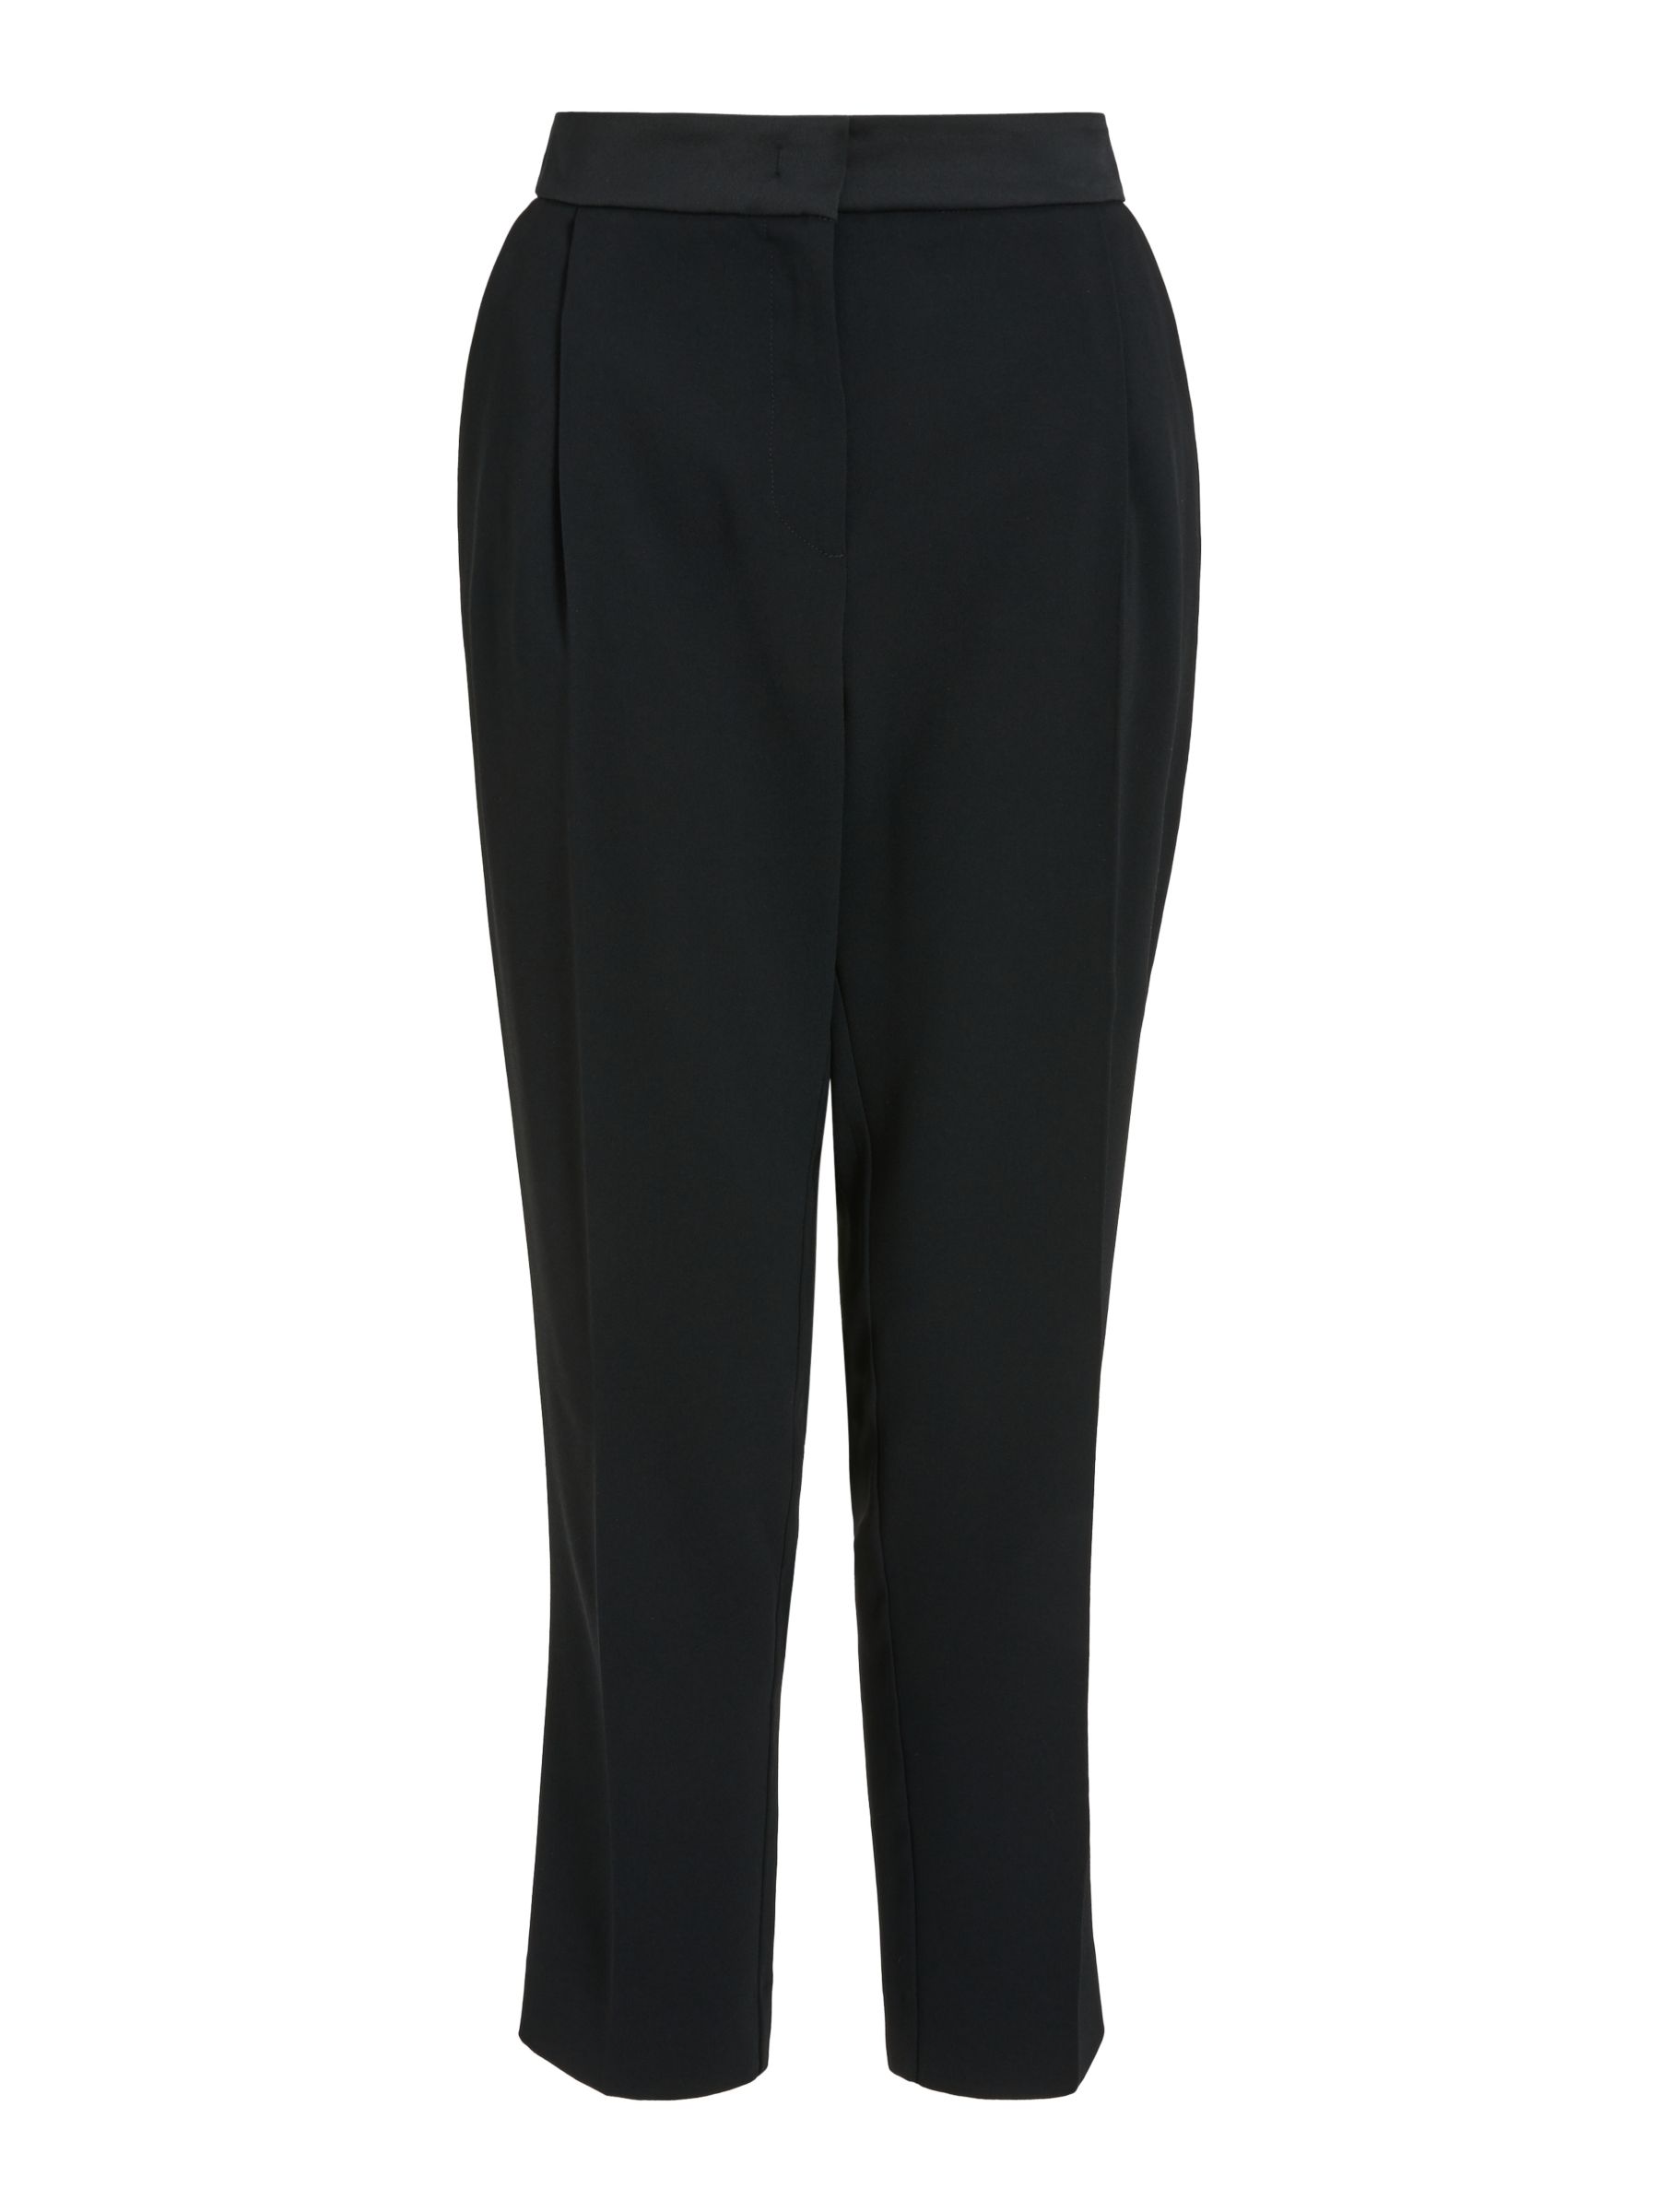 Marella Izabel Tailored Trousers, Black